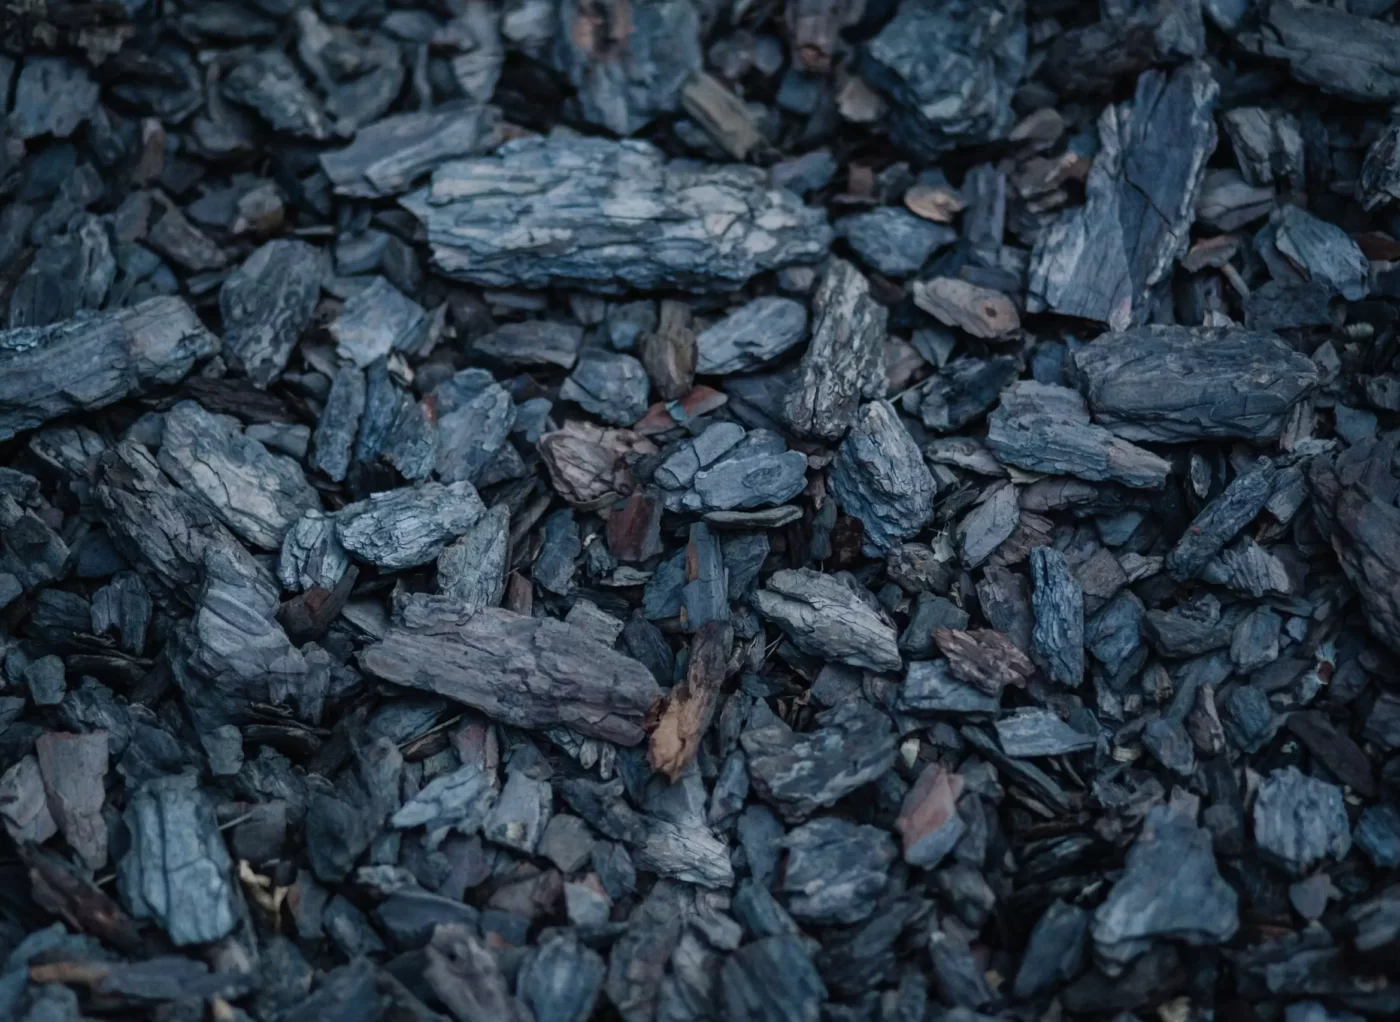 a close up photo of a pile of coal